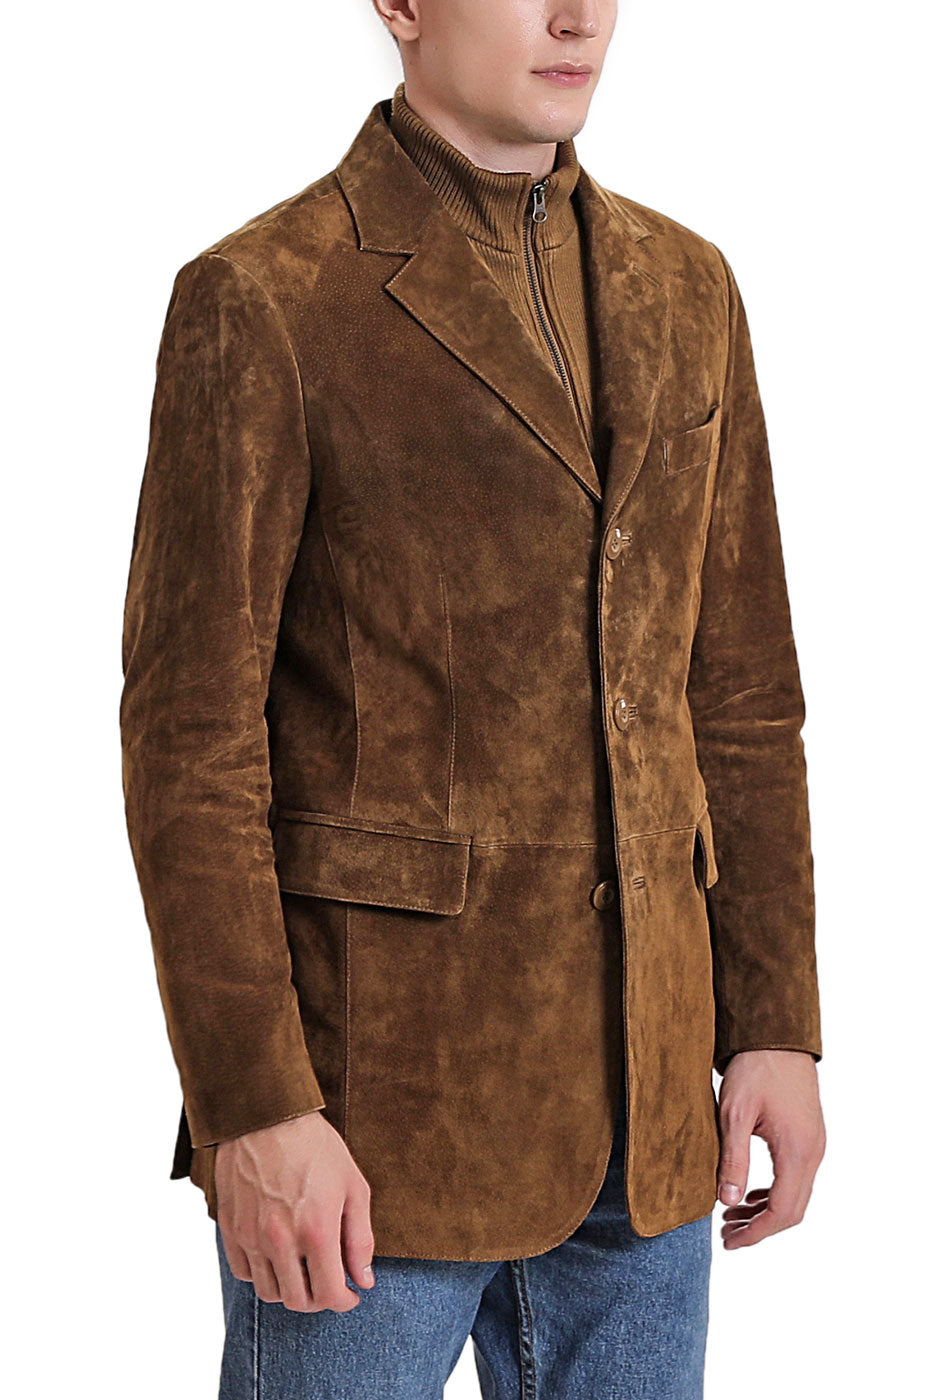 LeatherViz-Suede Leather Men Blazer in Gray – LeatherViz- Men Leather  Jackets | Women Leather Jackets | Coats & Blazers